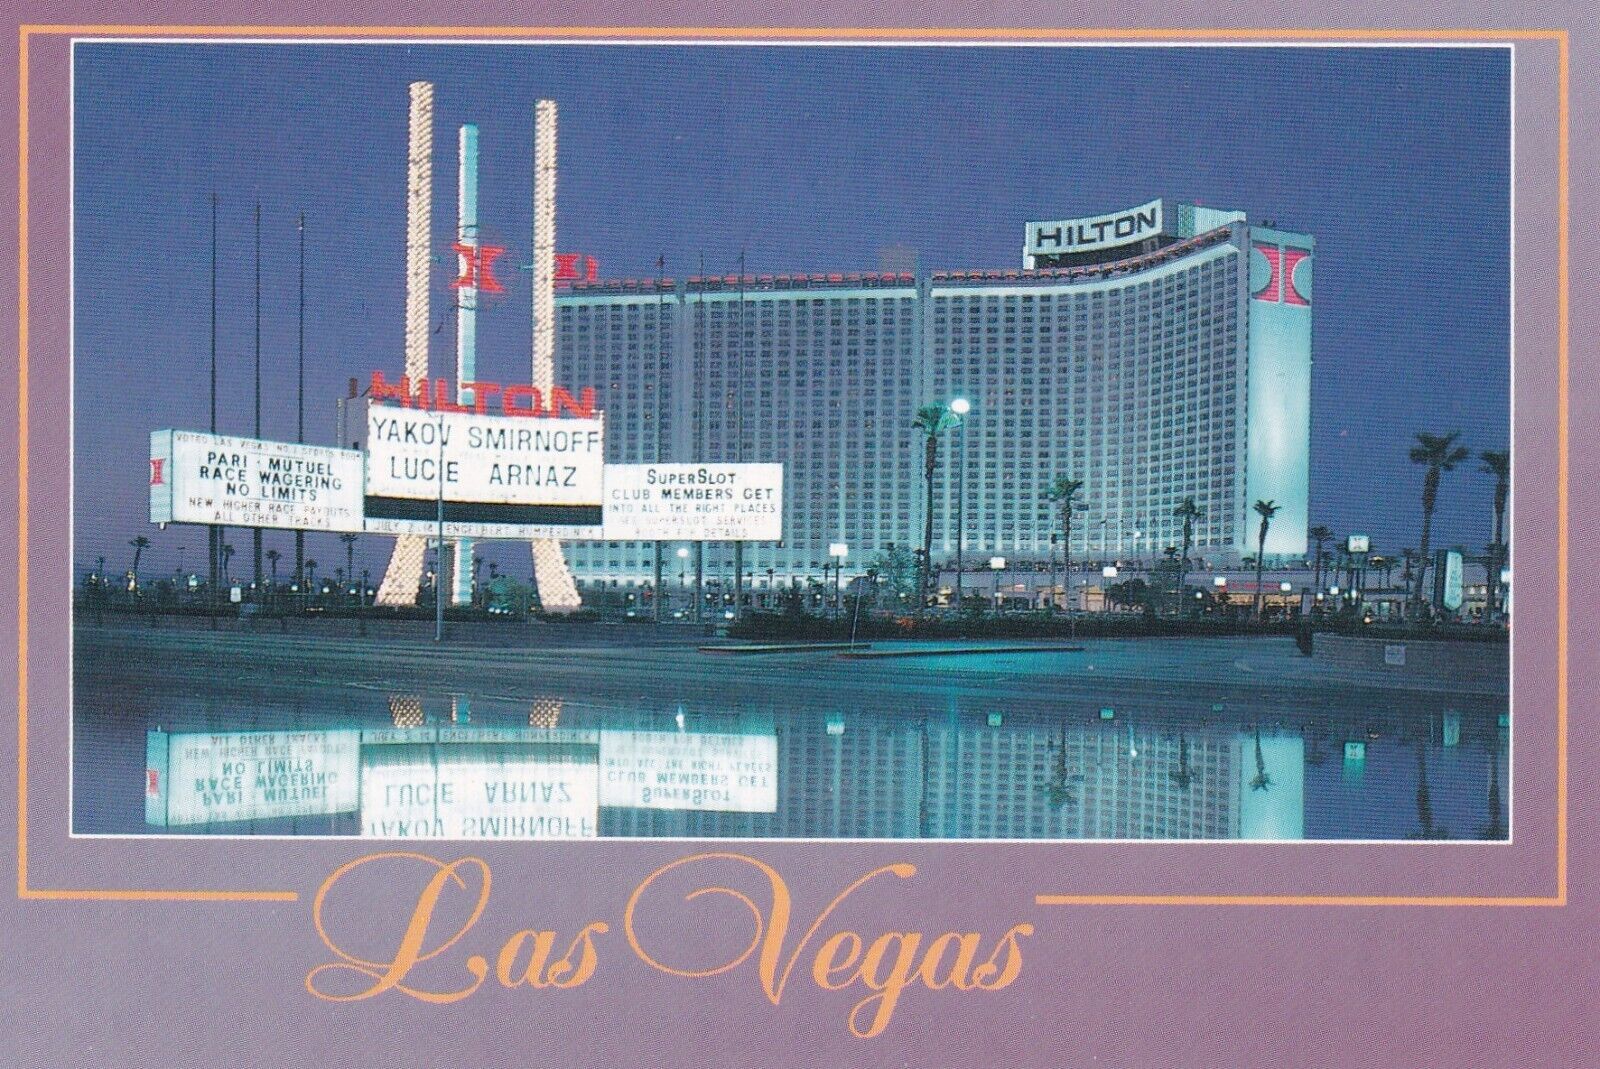 Lucie Arnaz at Hilton Casino Las Vegas Nevada Postcard 1991 Closed 2012